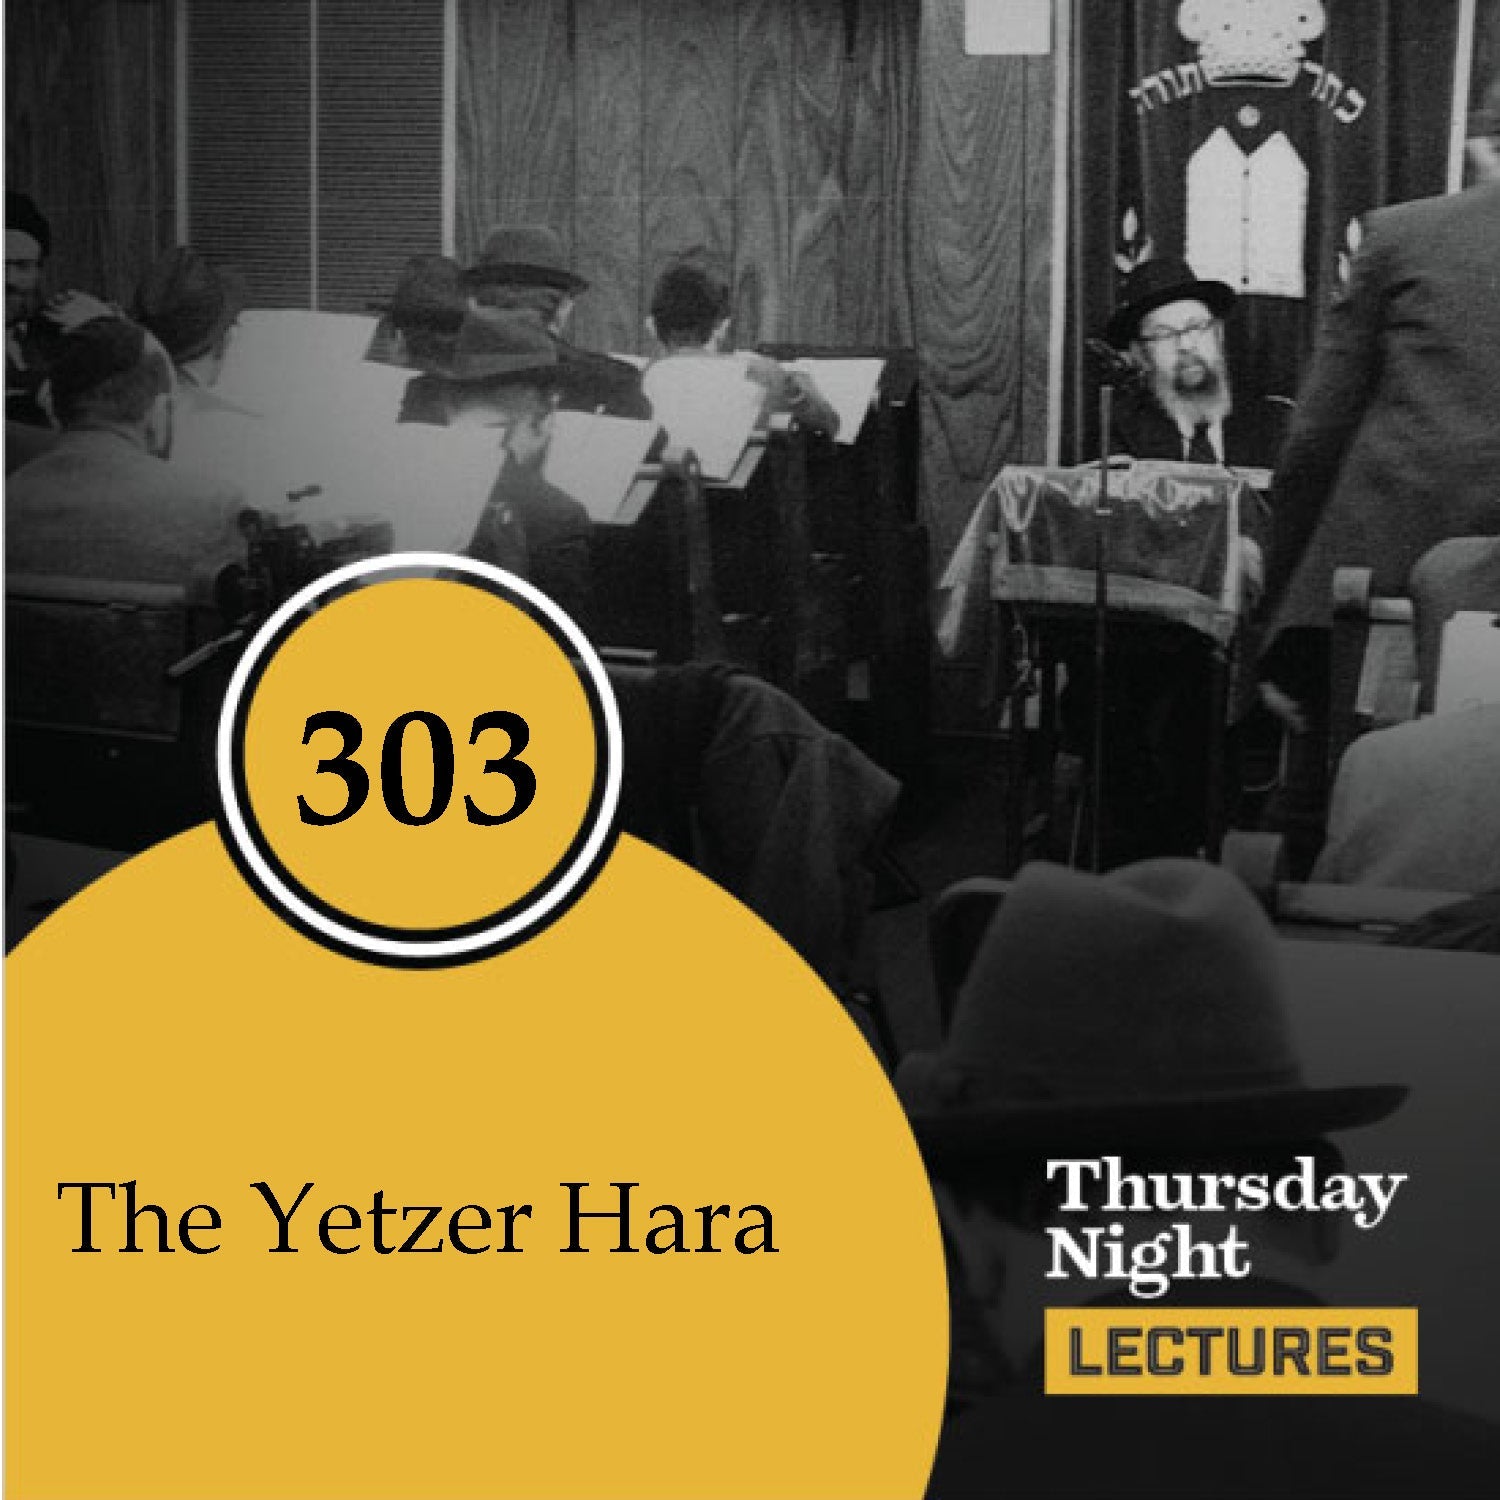 303 - The Yetzer Hara